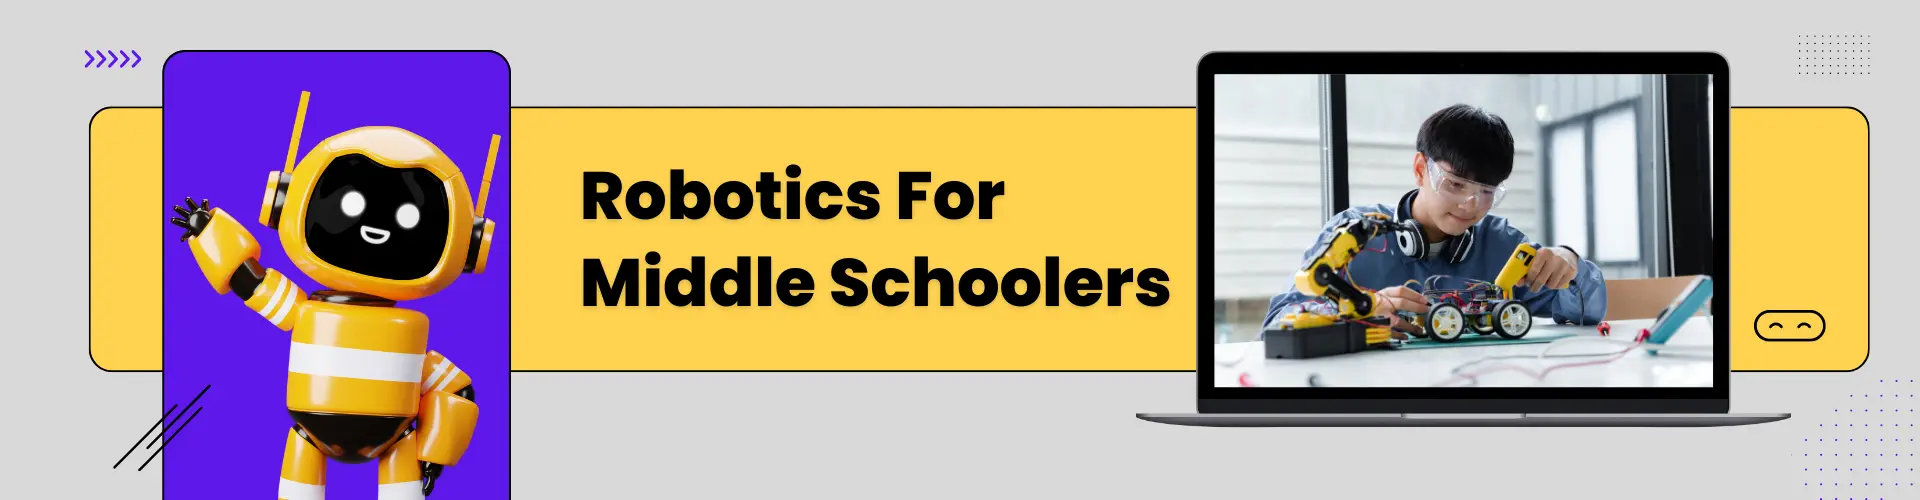 Robotics For Middle Schoolers